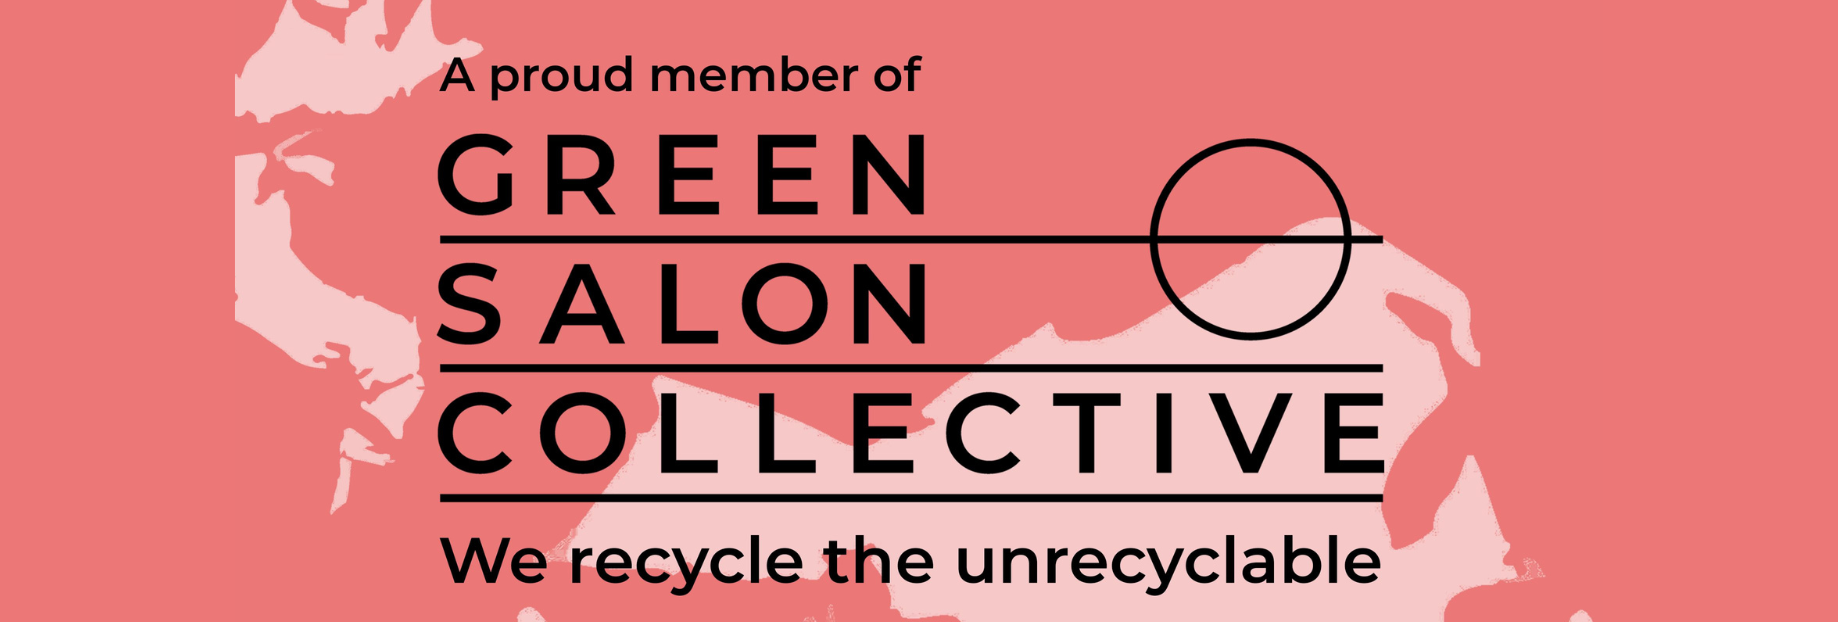 Green Salon Collective Banner